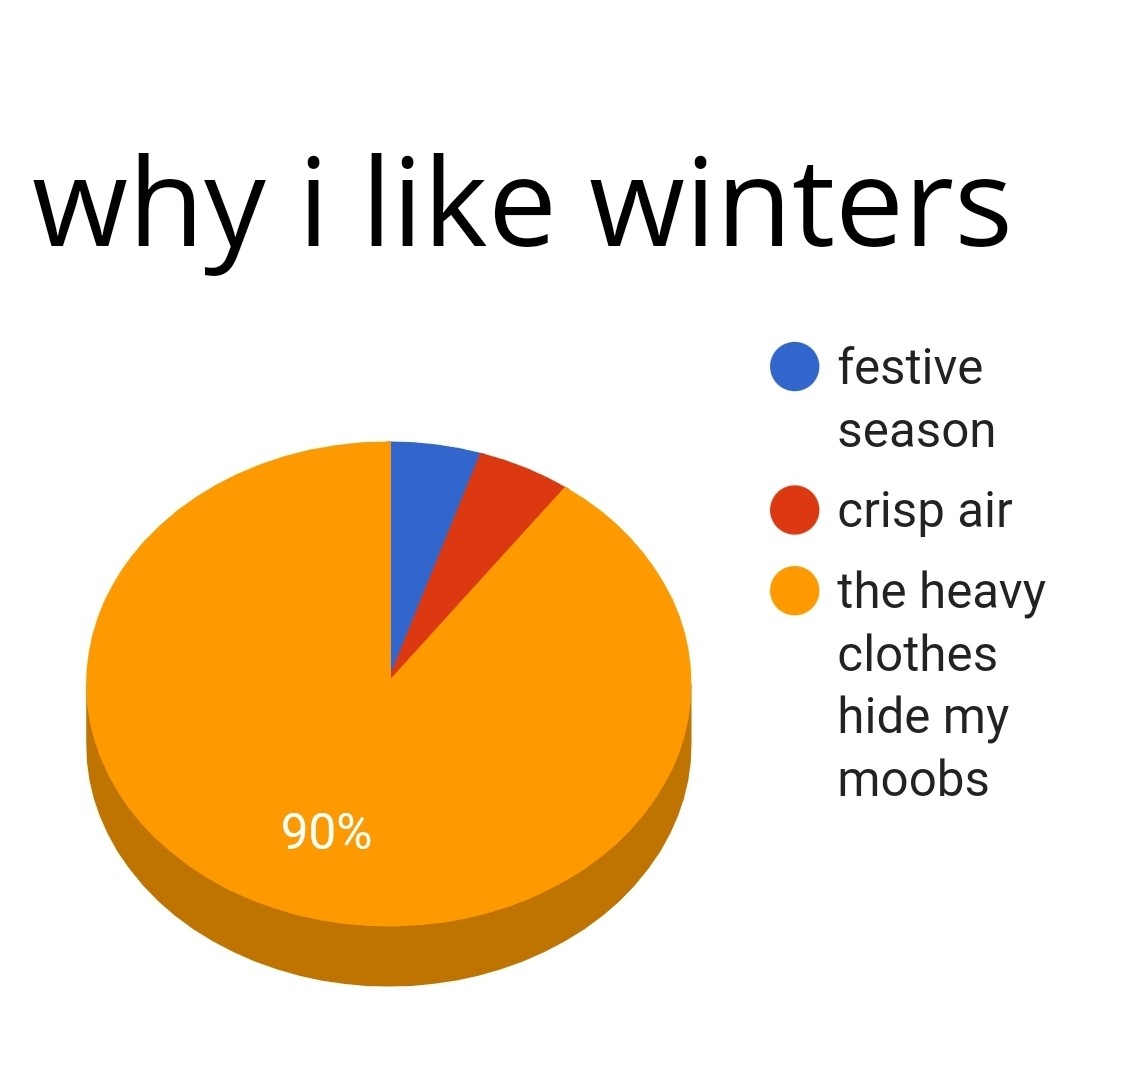 funniest memes - why i winters festive season crisp air the heavy clothes hide my moobs 90%